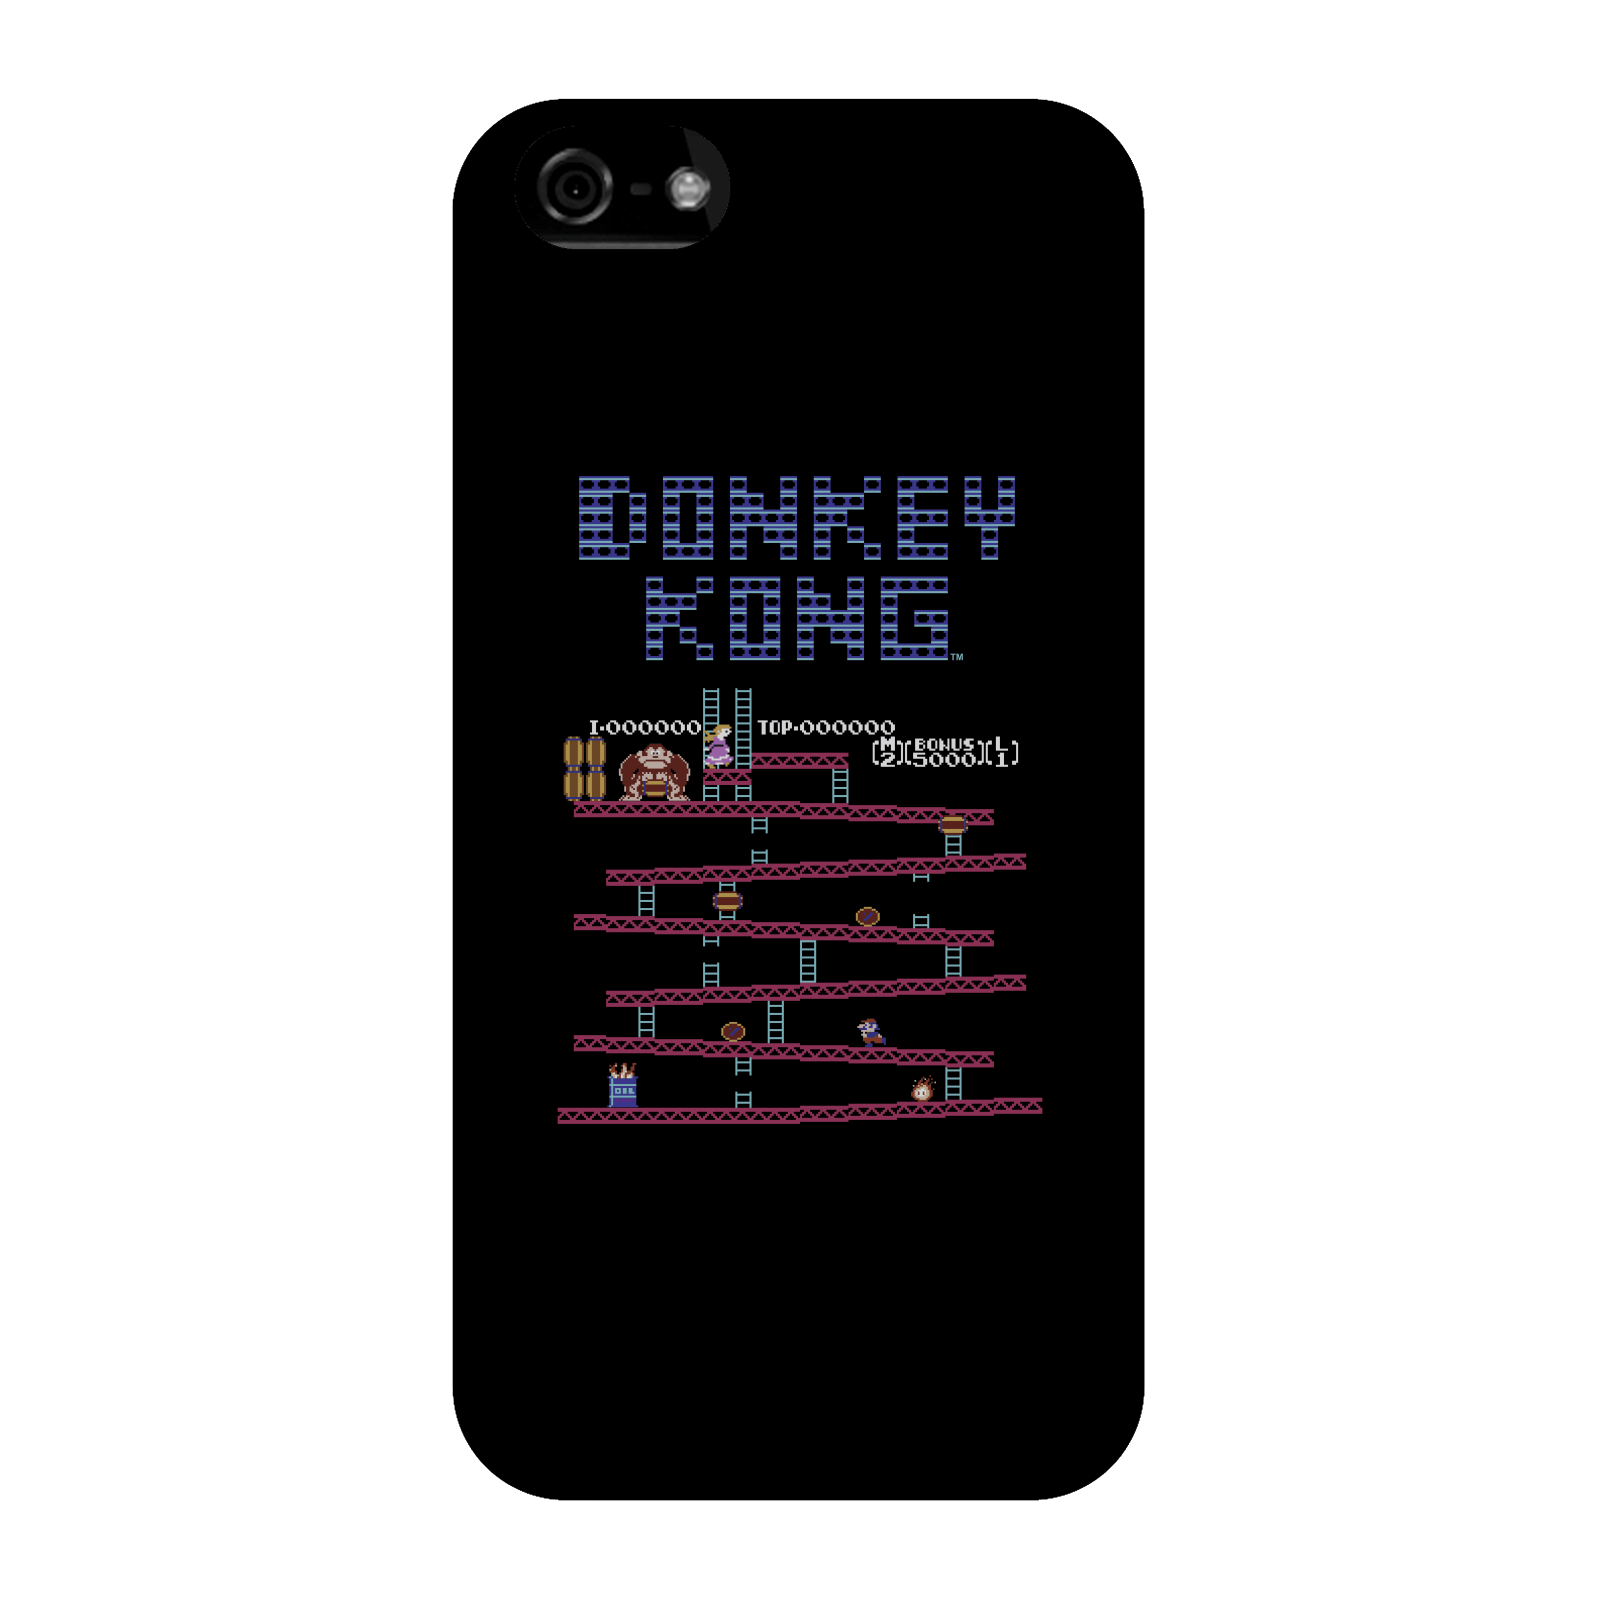 Nintendo Donkey Kong Retro Phone Case - iPhone 5C - Snap Case - Gloss